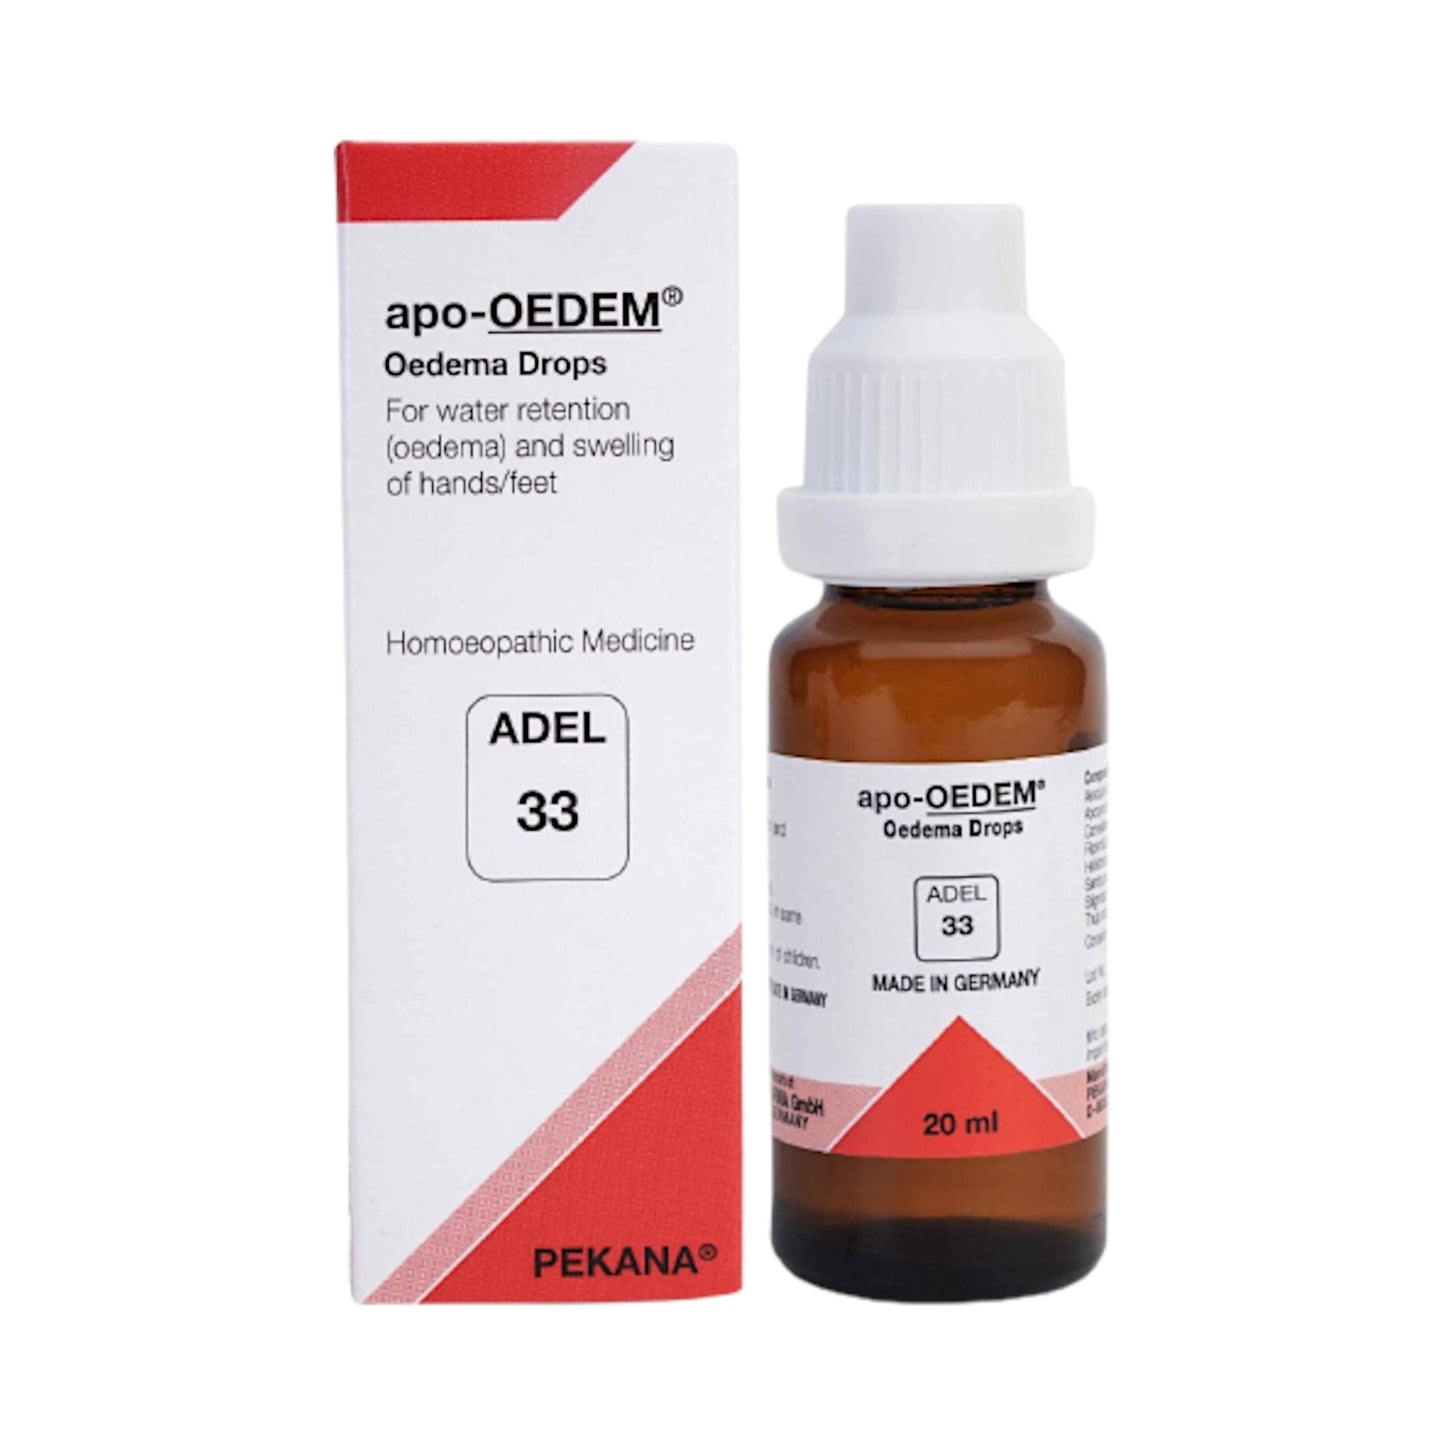 ADEL Germany Homeopathy - Adel33 Apo-OEDEM Drops 20 ml